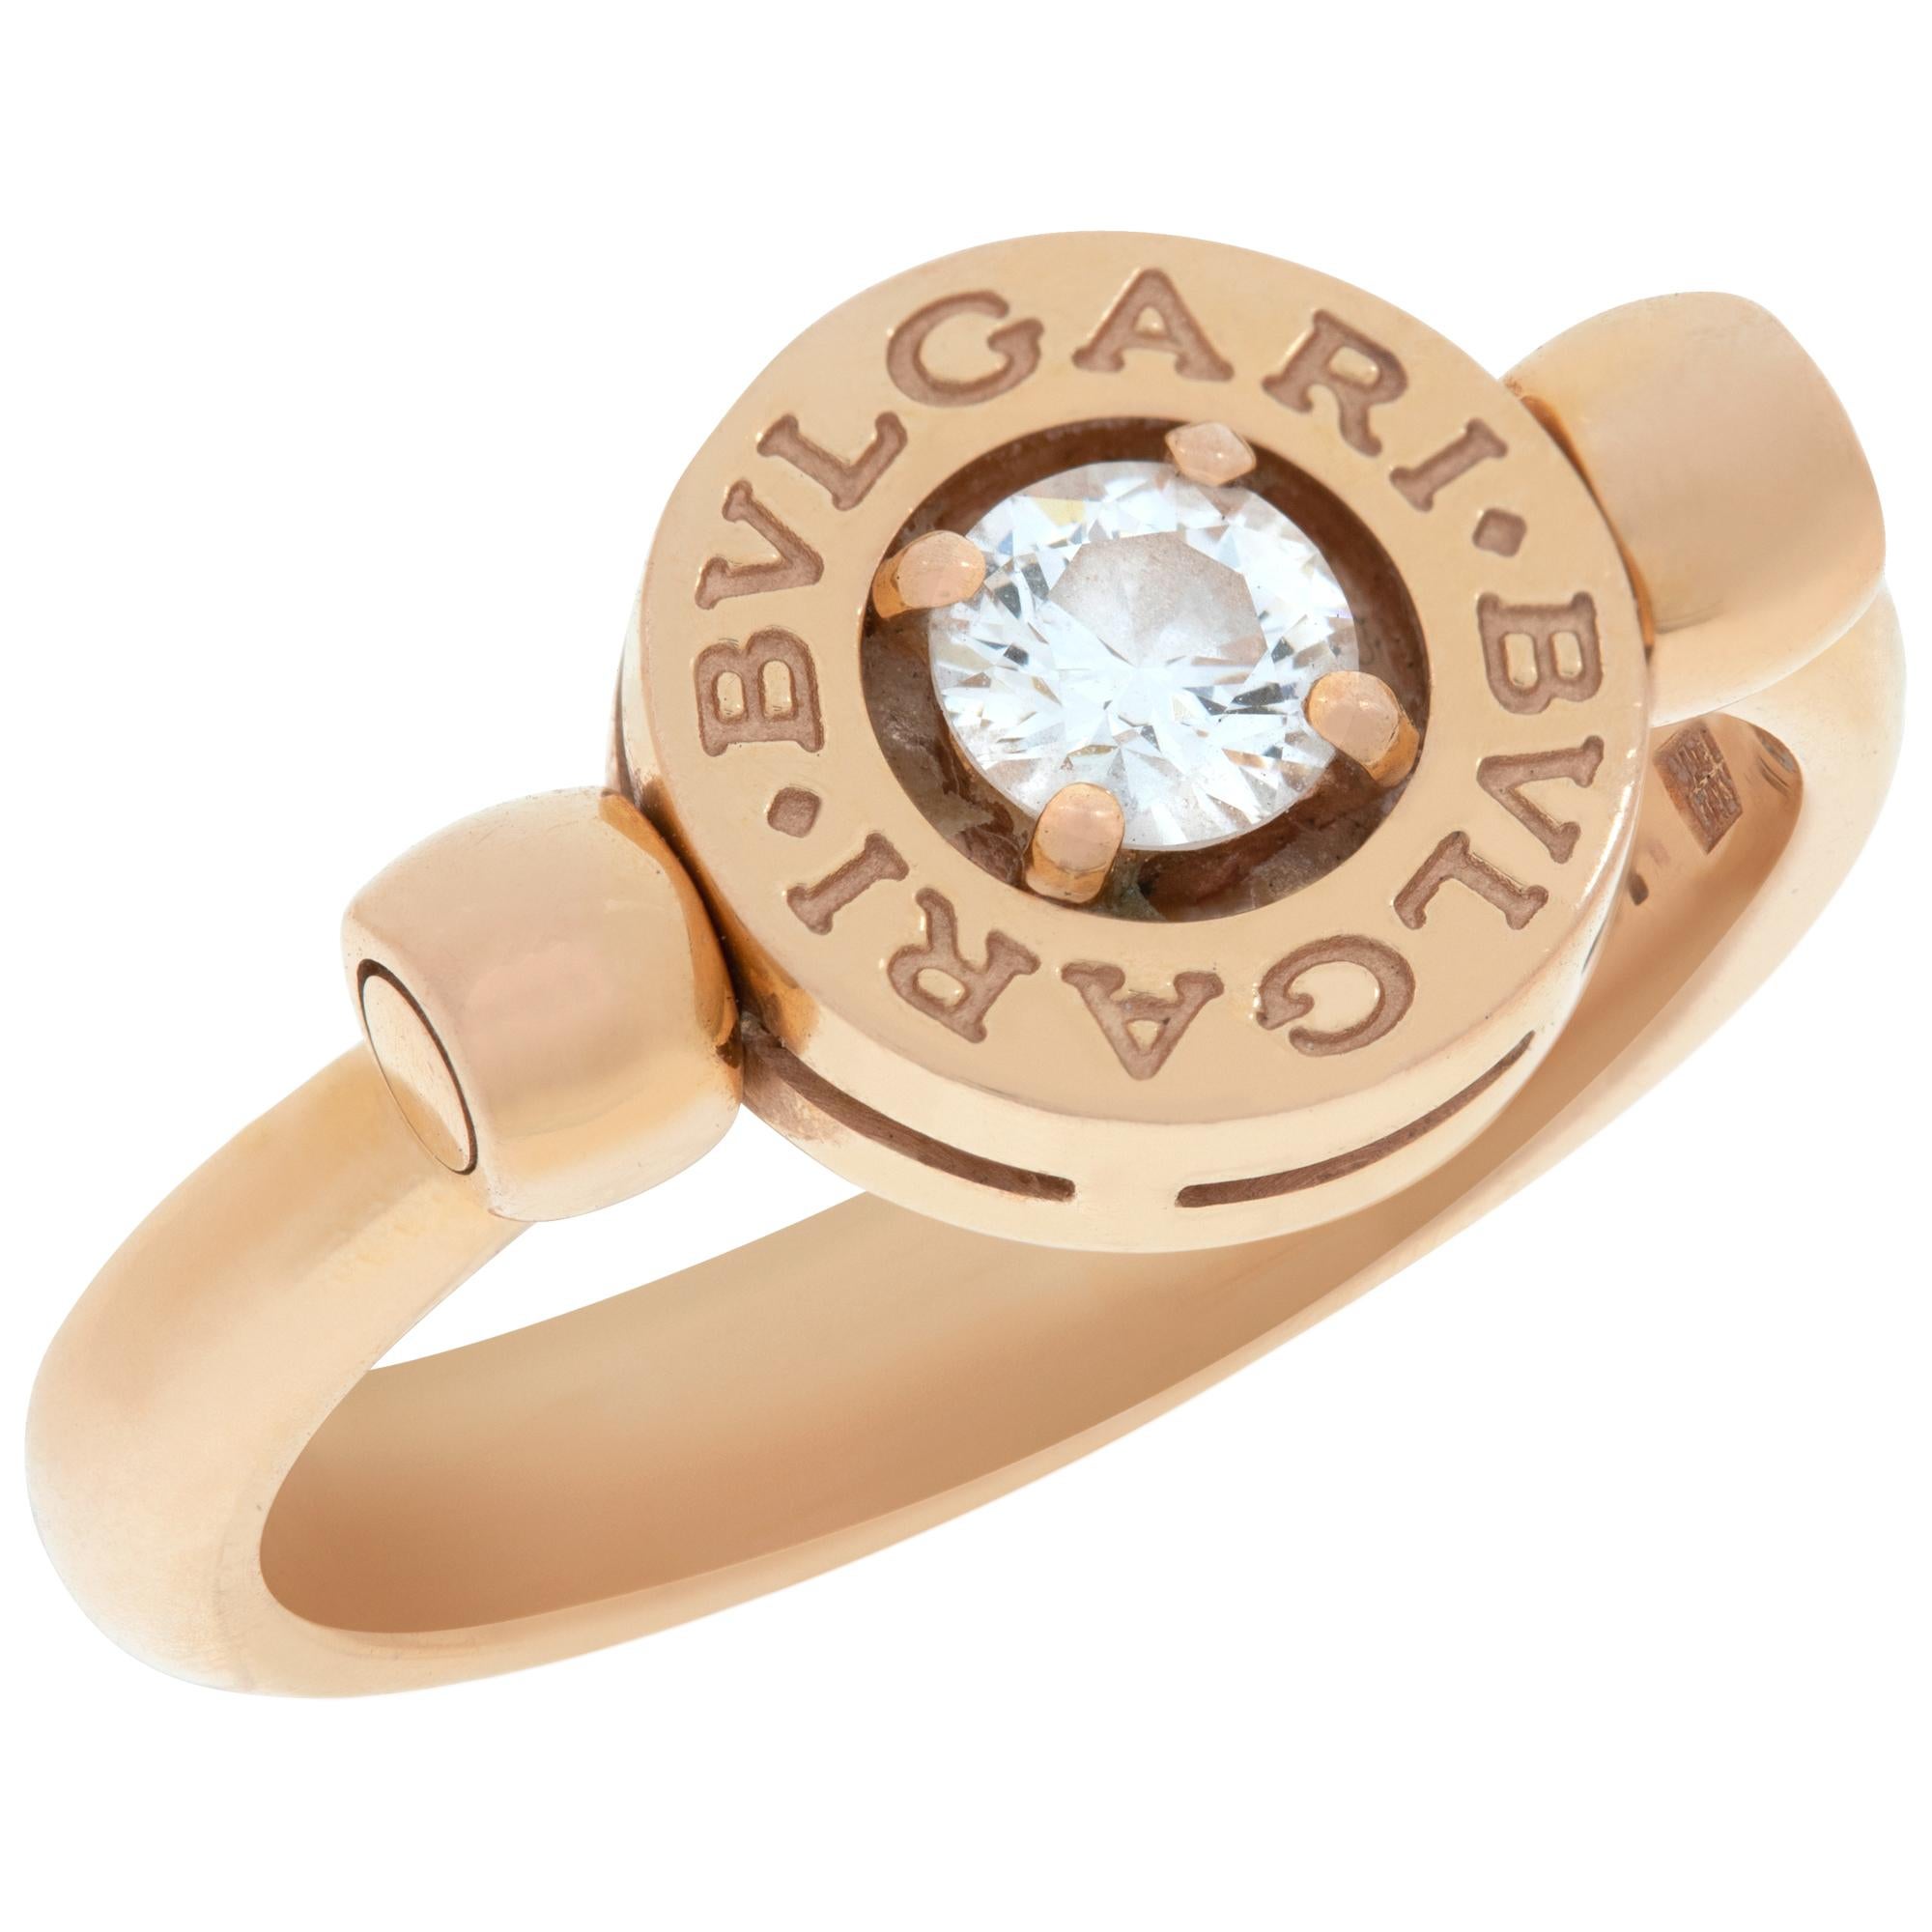 Bvlgari Bulgari flip ring in rose gold w/ 0.25 carat round brilliant cut diamond In Excellent Condition For Sale In Surfside, FL